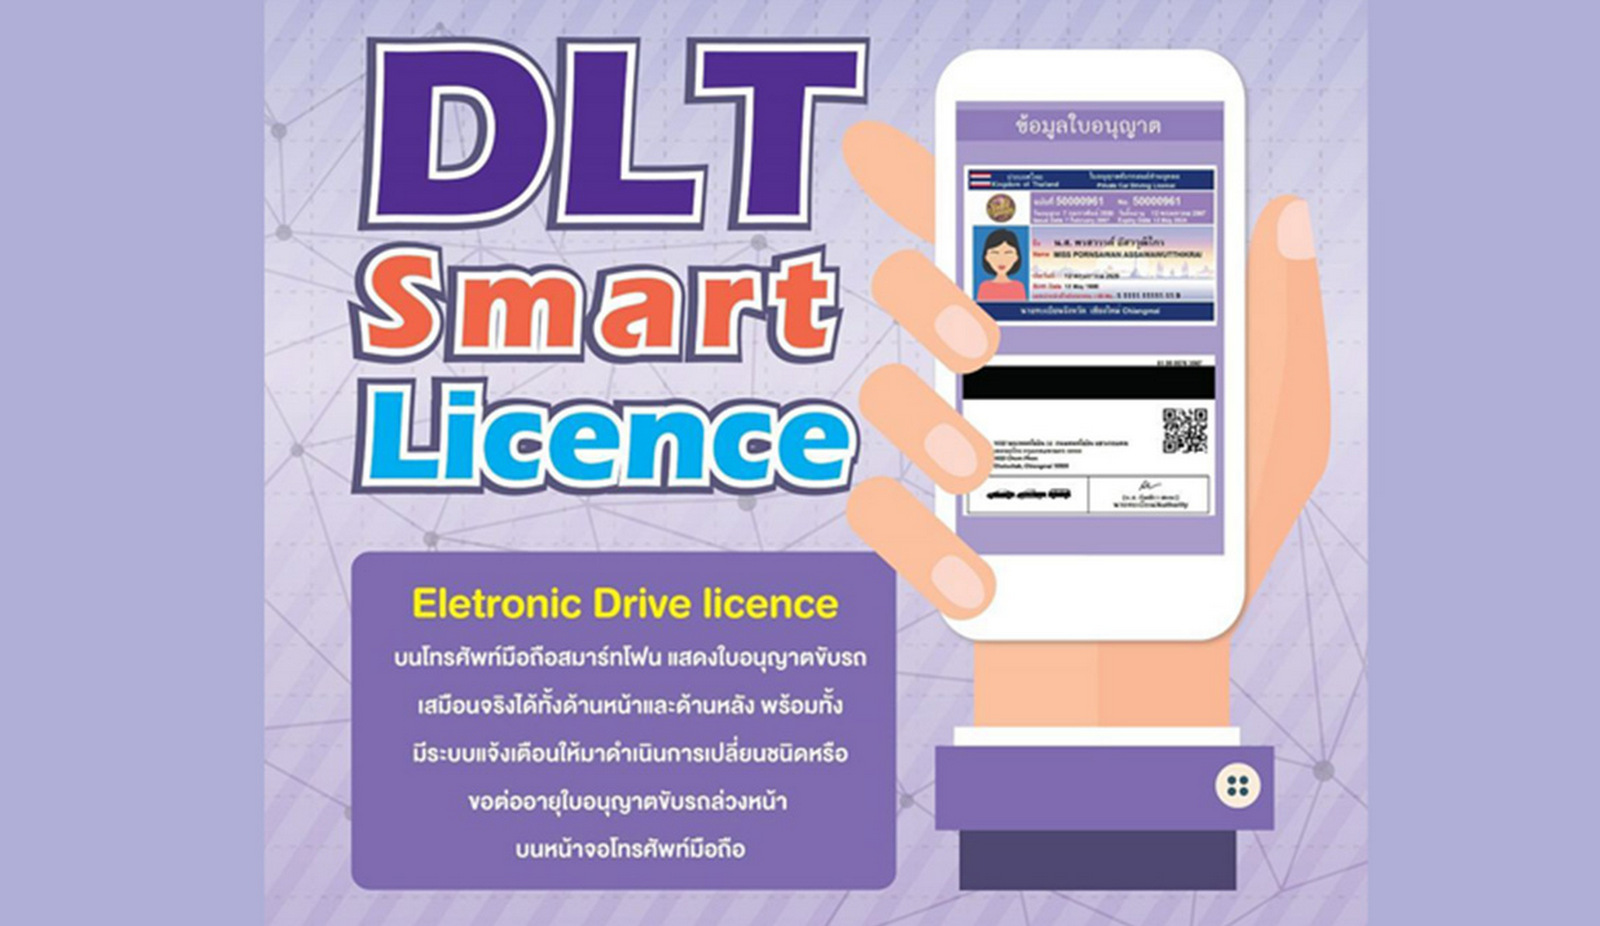 Electronic Driving Licence, ใบอนุญาตขับรถอิเล็กทรอนิกส์